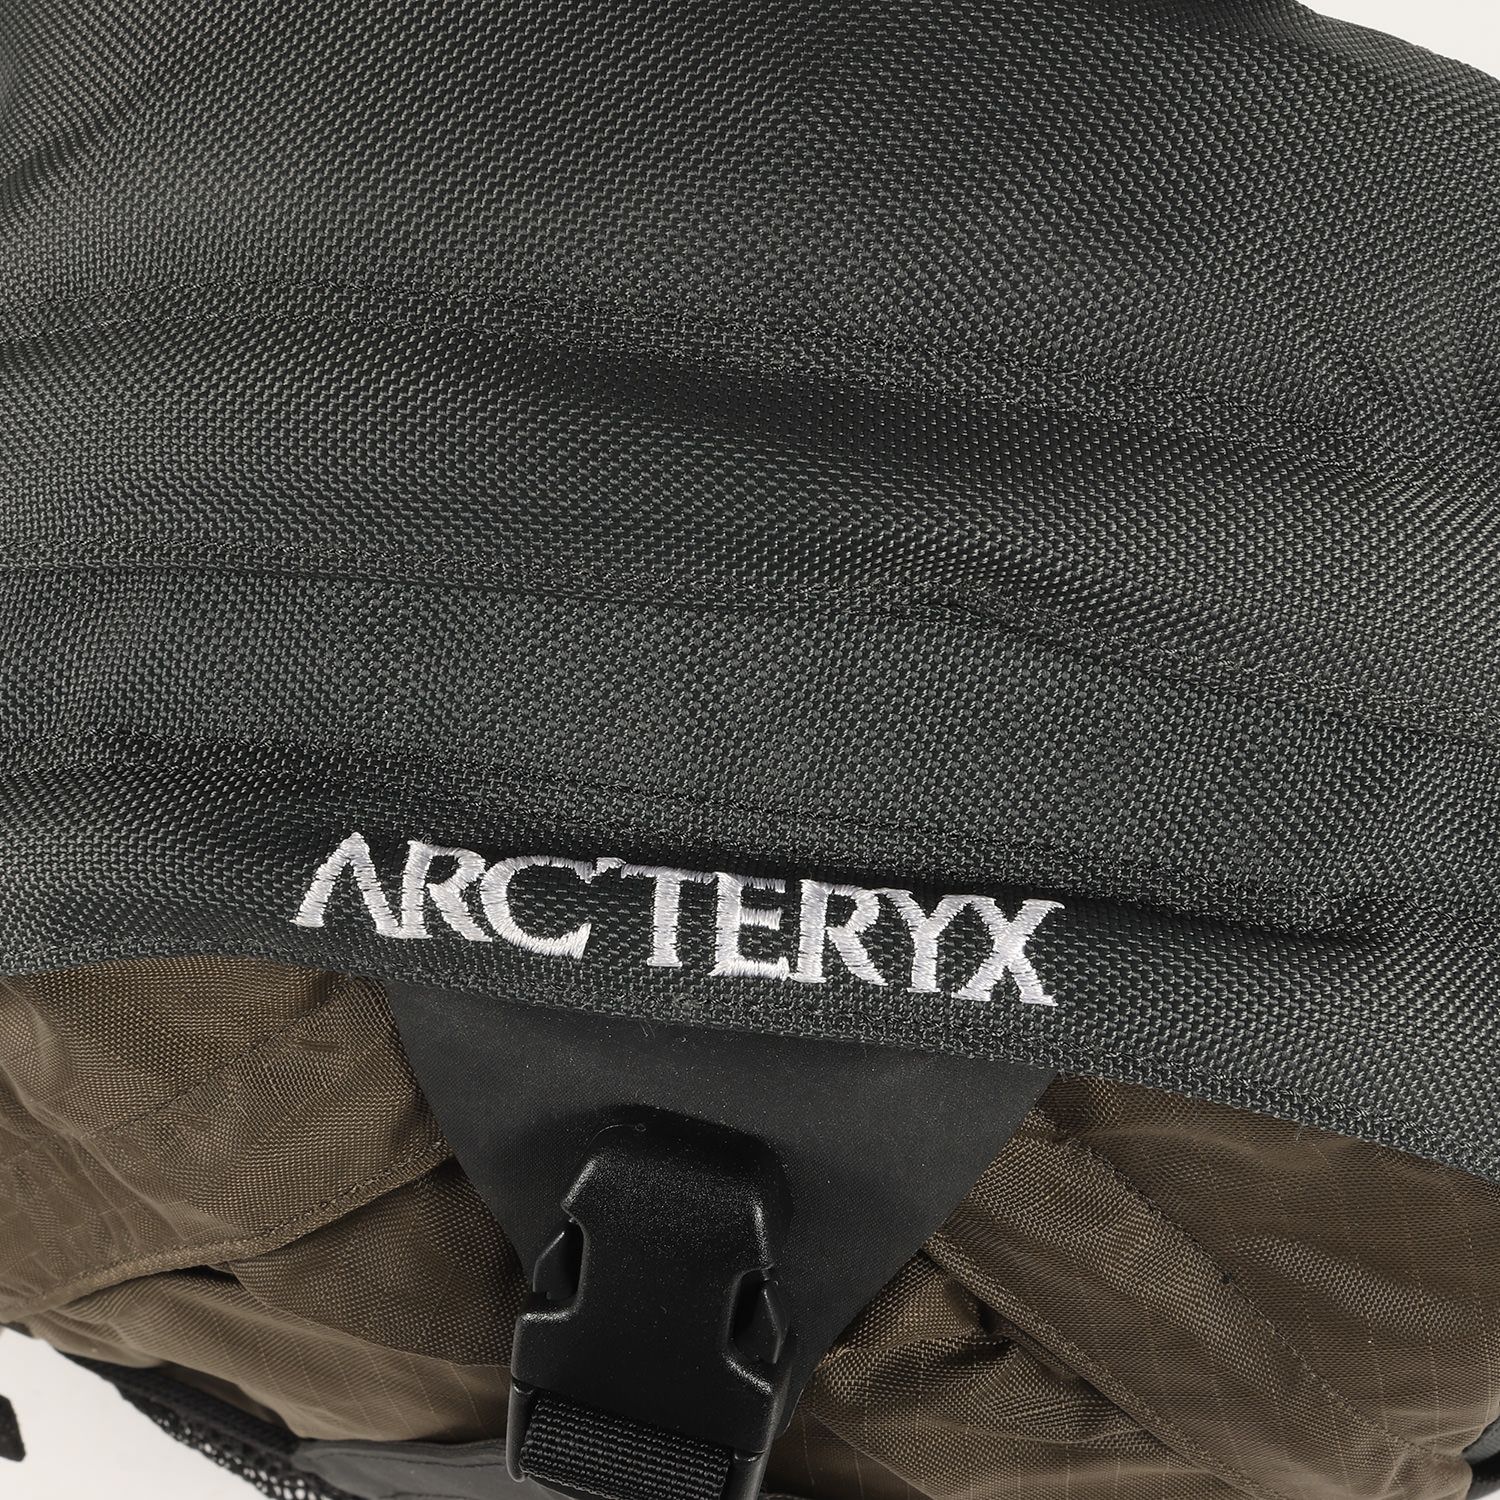 ARC TERYX アークテリクス バッグ 90s ボルト バックパック リュック 